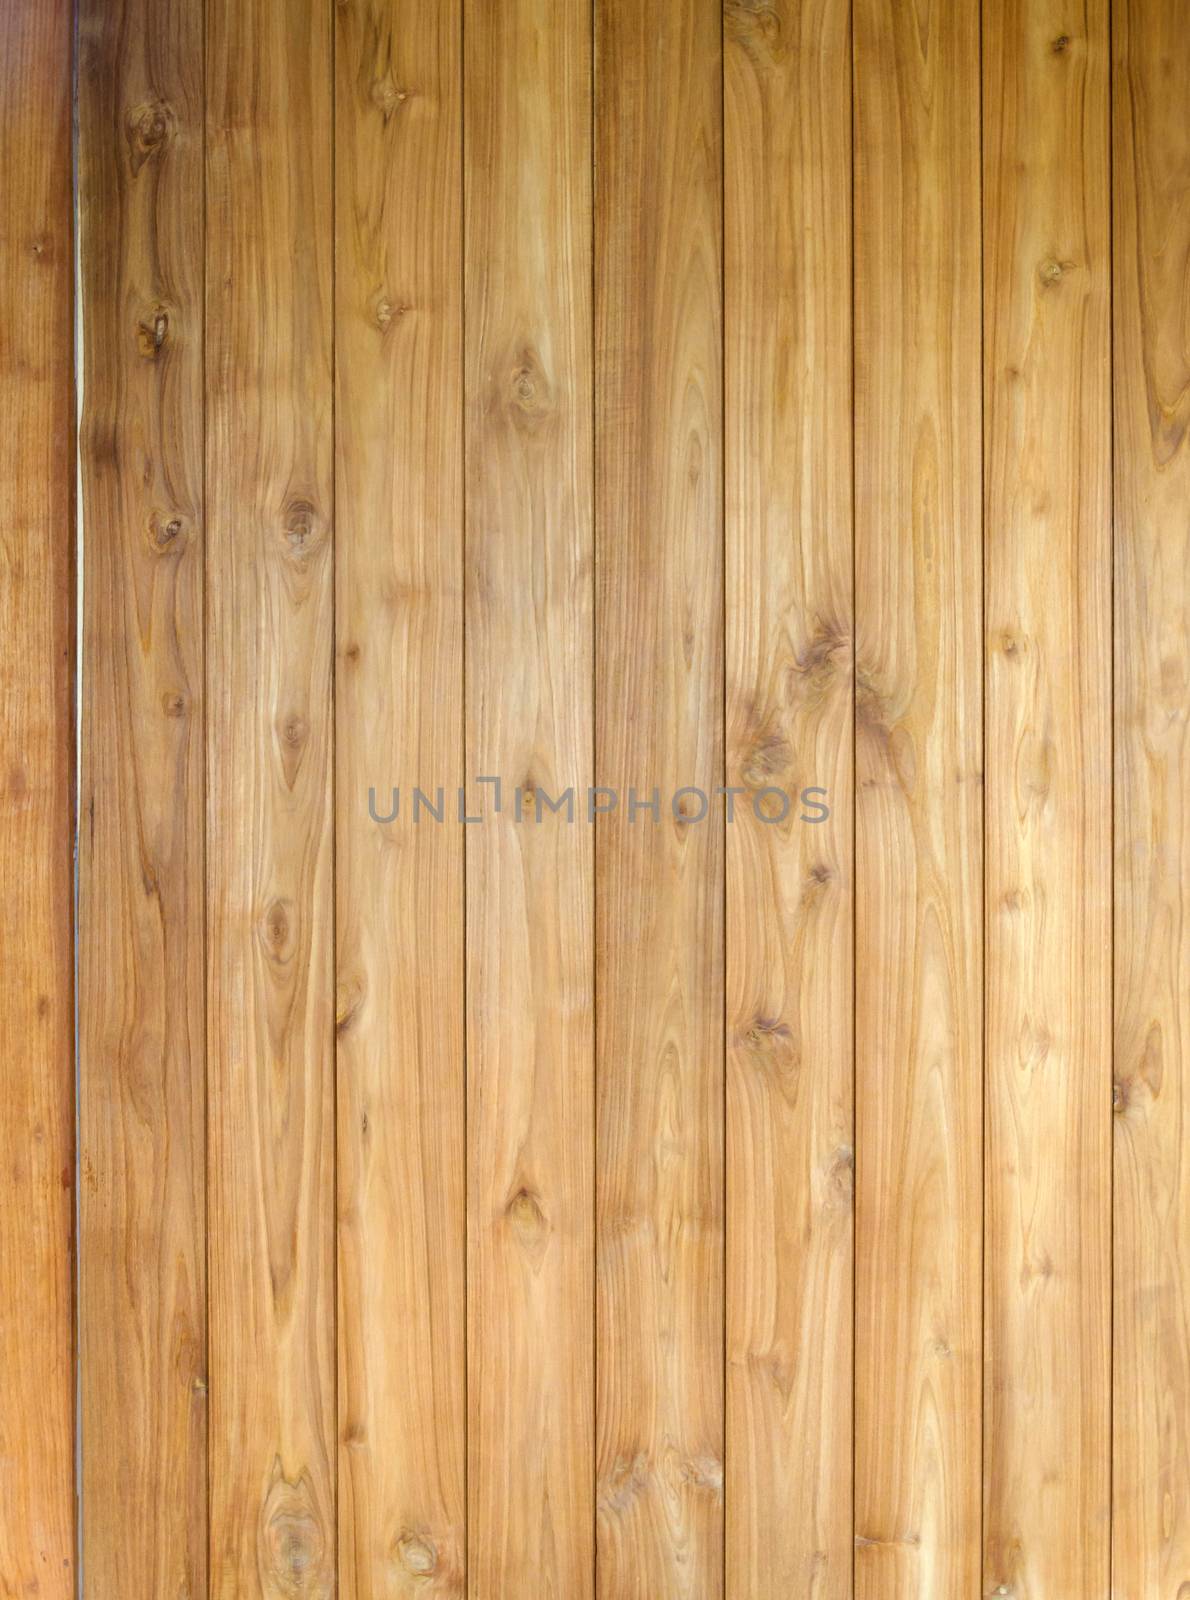 Vertical wooden planks texture background 